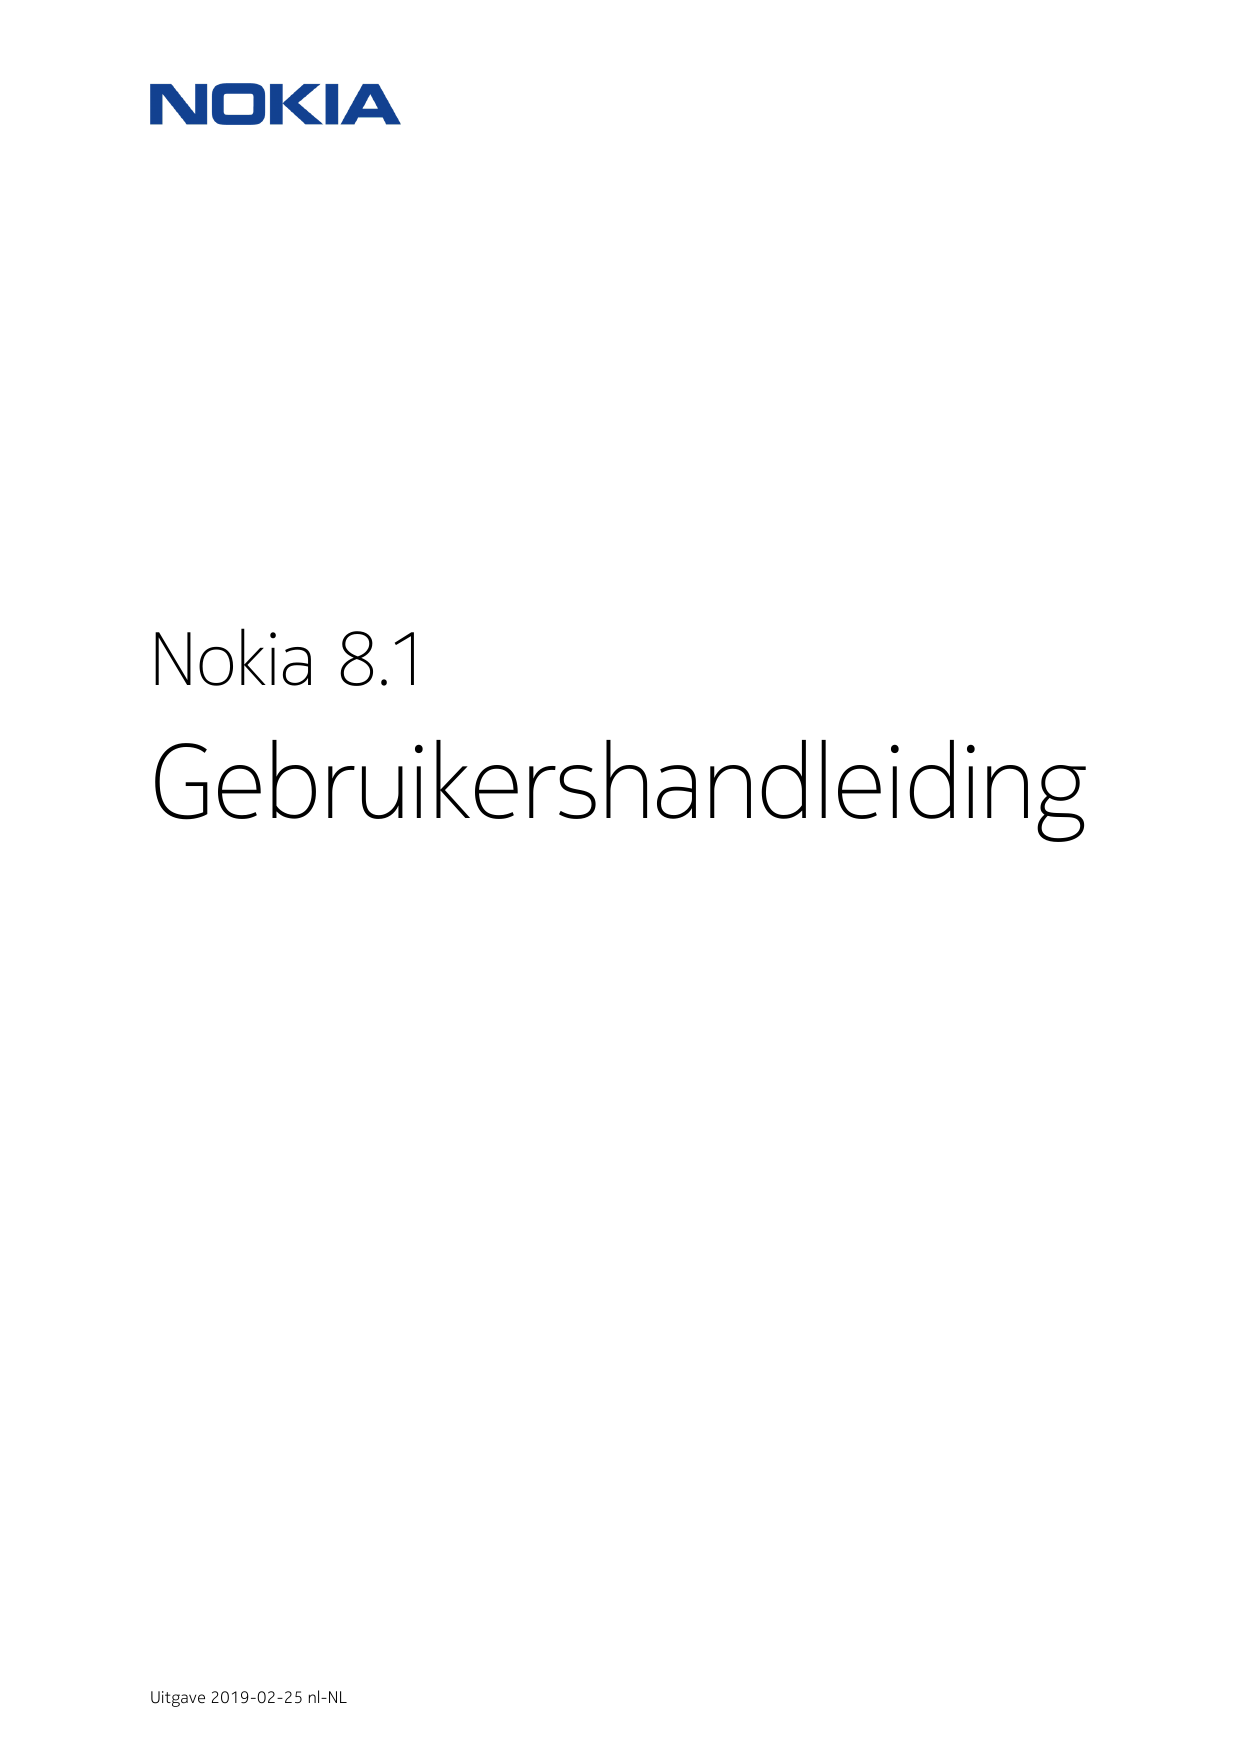 Nokia 8.1GebruikershandleidingUitgave 2019-02-25 nl-NL